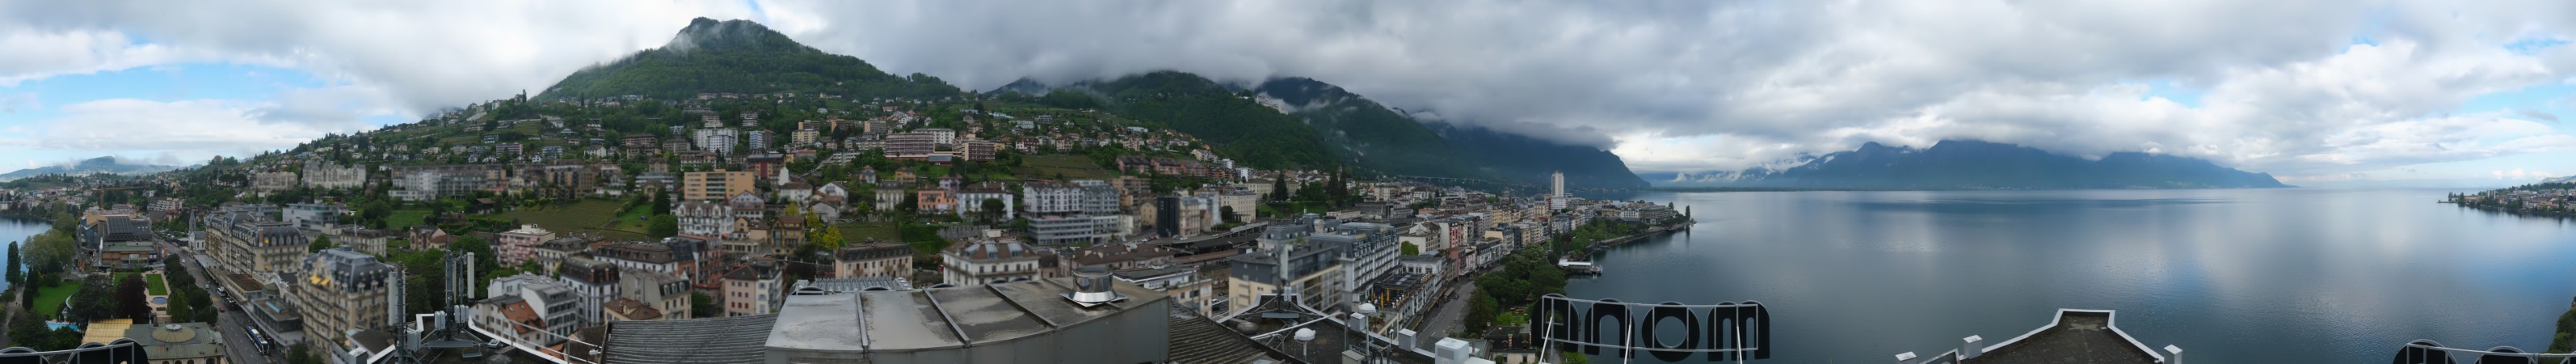 Montreux (Eurotel) - 396m